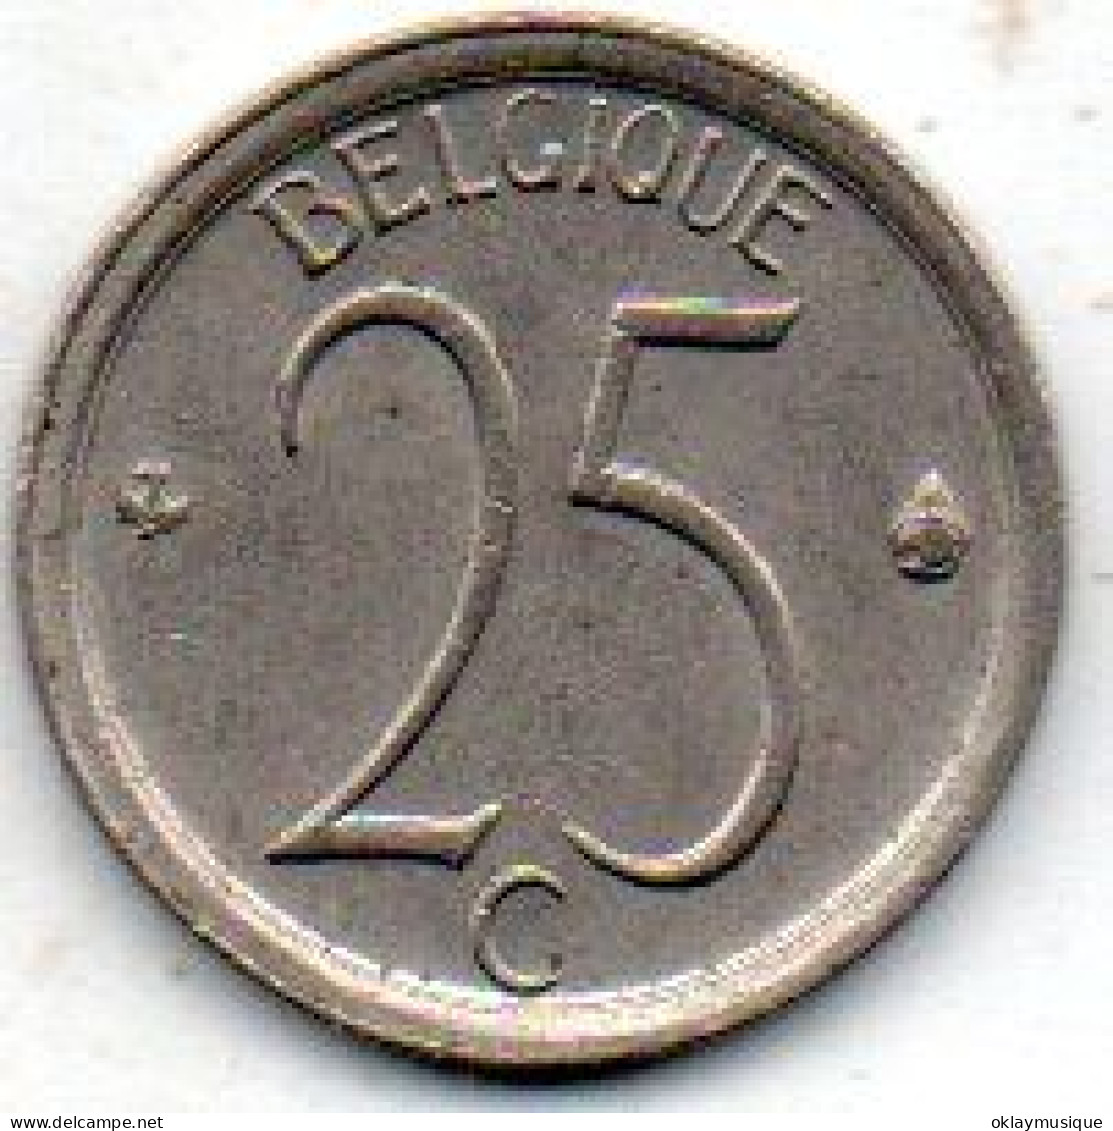 25 Centimes 1974 - 25 Centimes